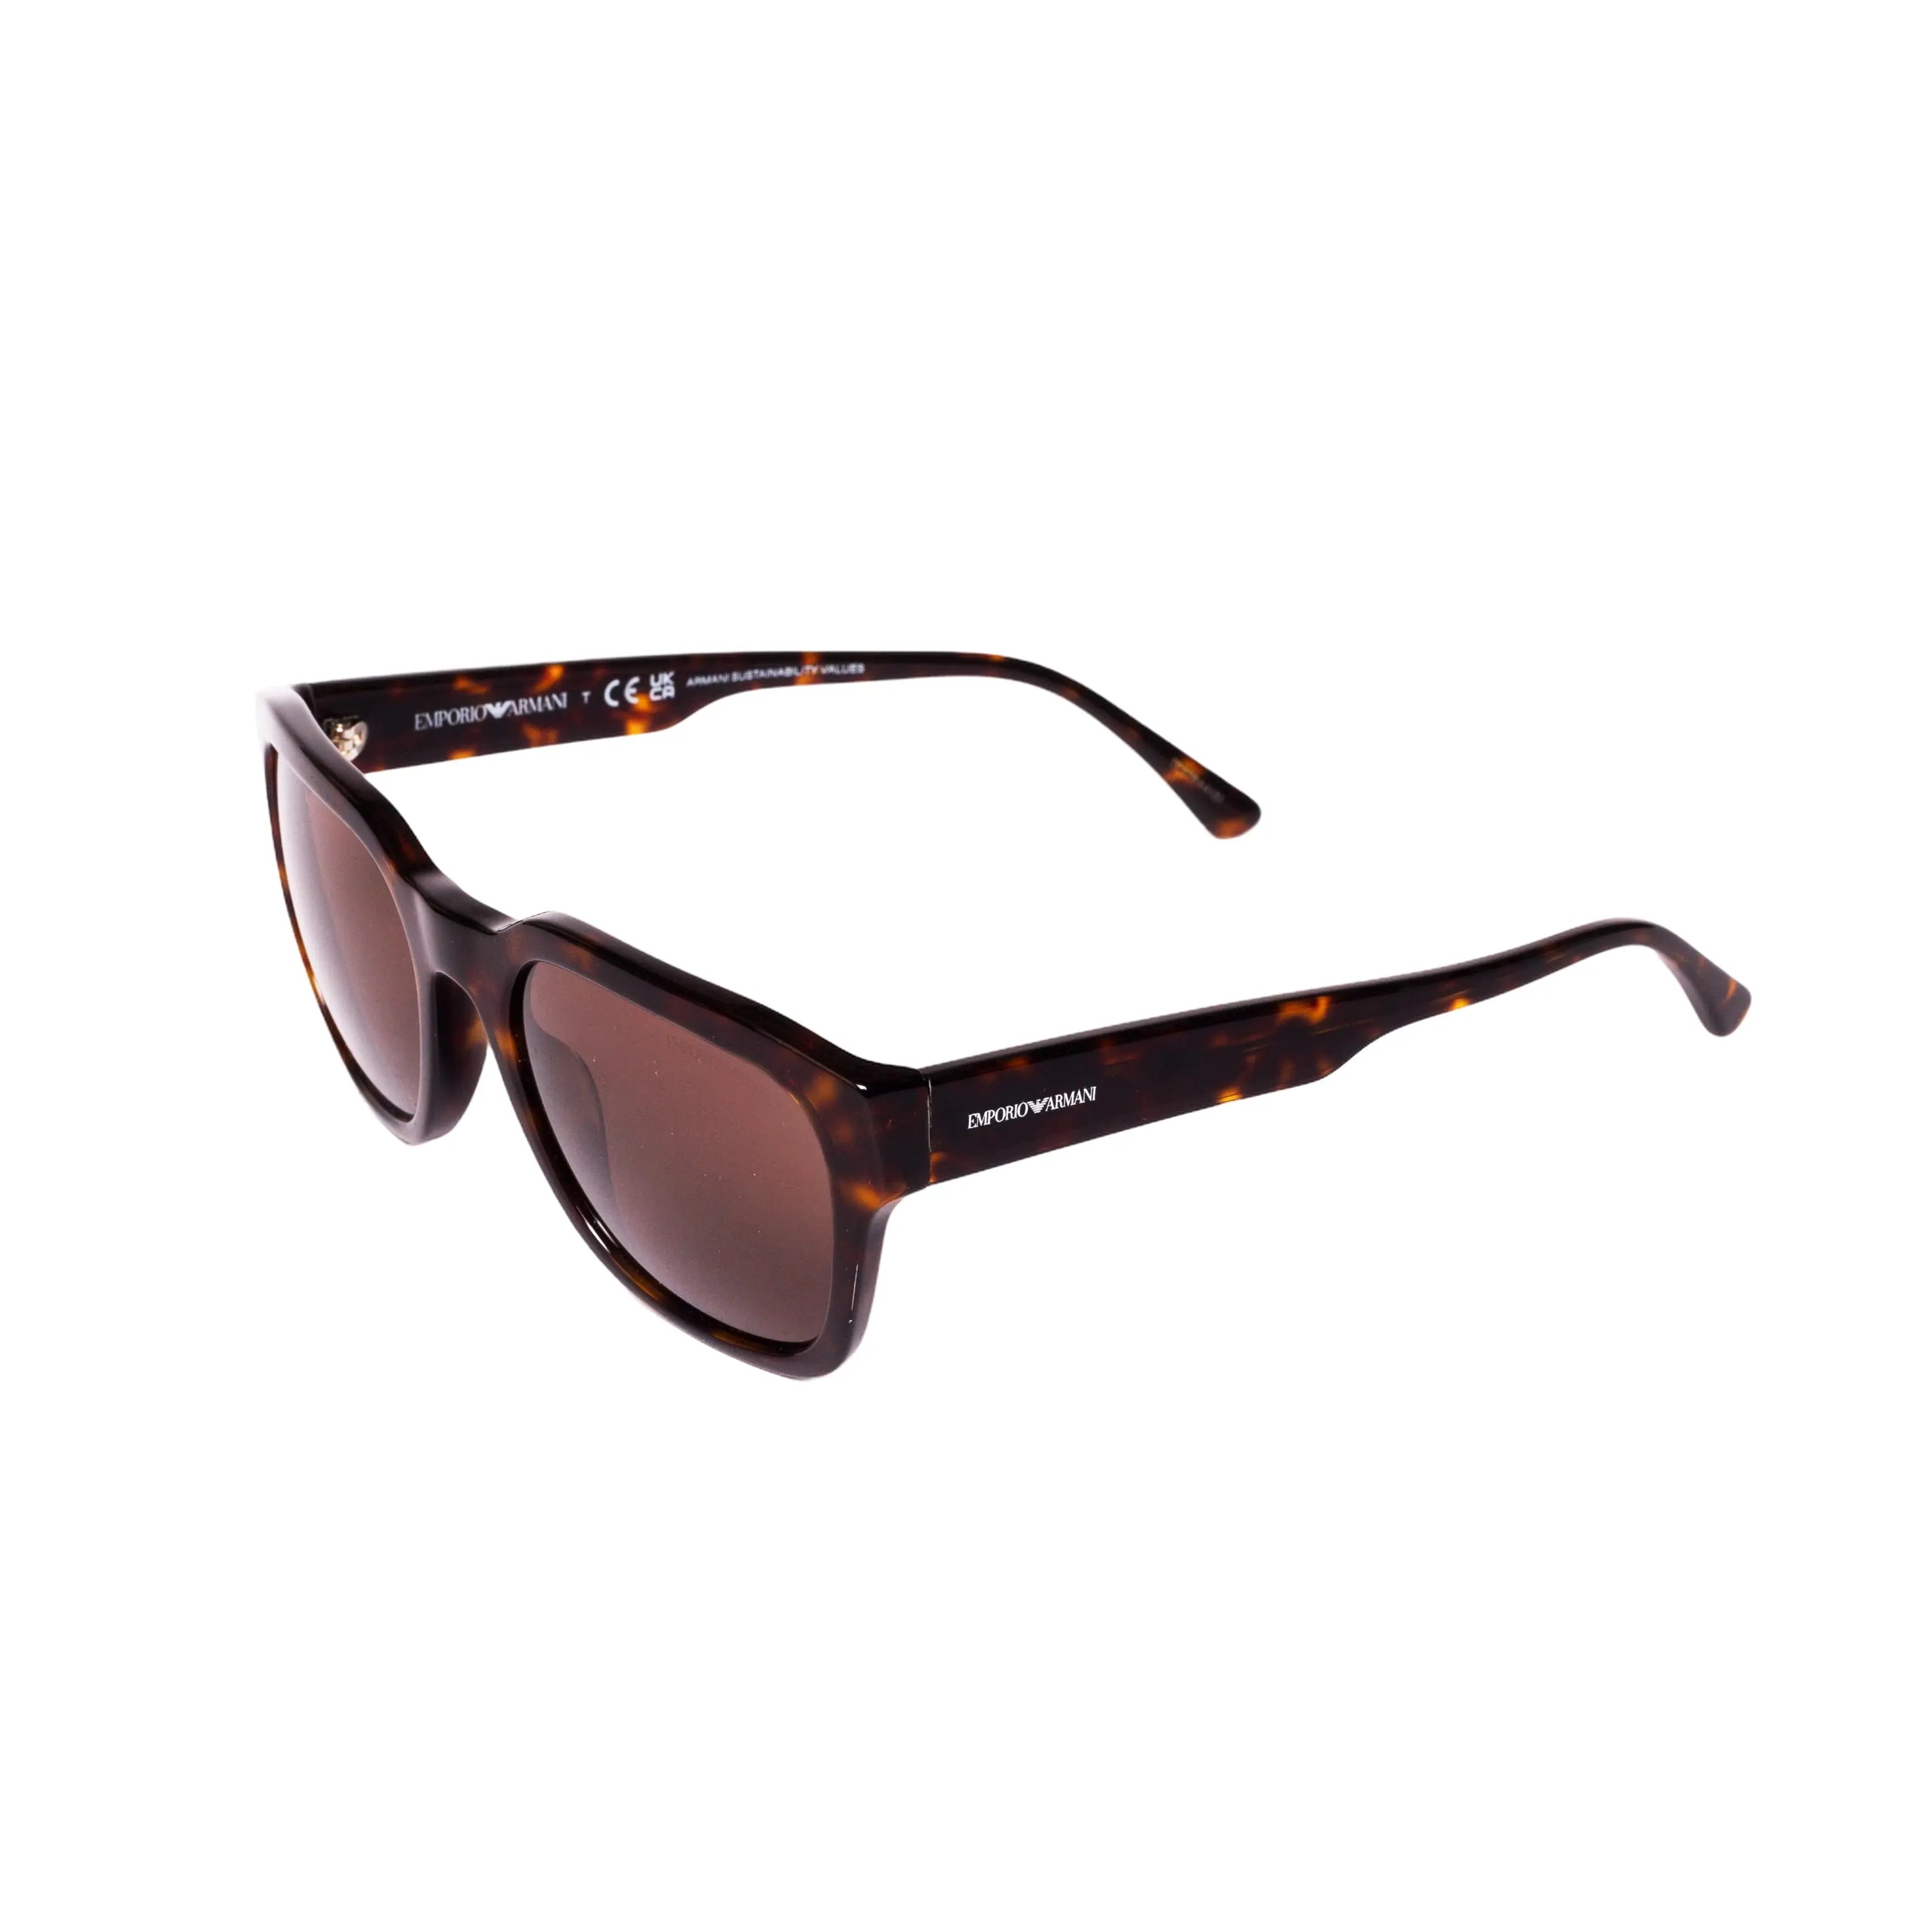 Emporio Armani-EA 4175-55-5879 Sunglasses - Premium Sunglasses from Emporio Armani - Just Rs. 11890! Shop now at Laxmi Opticians